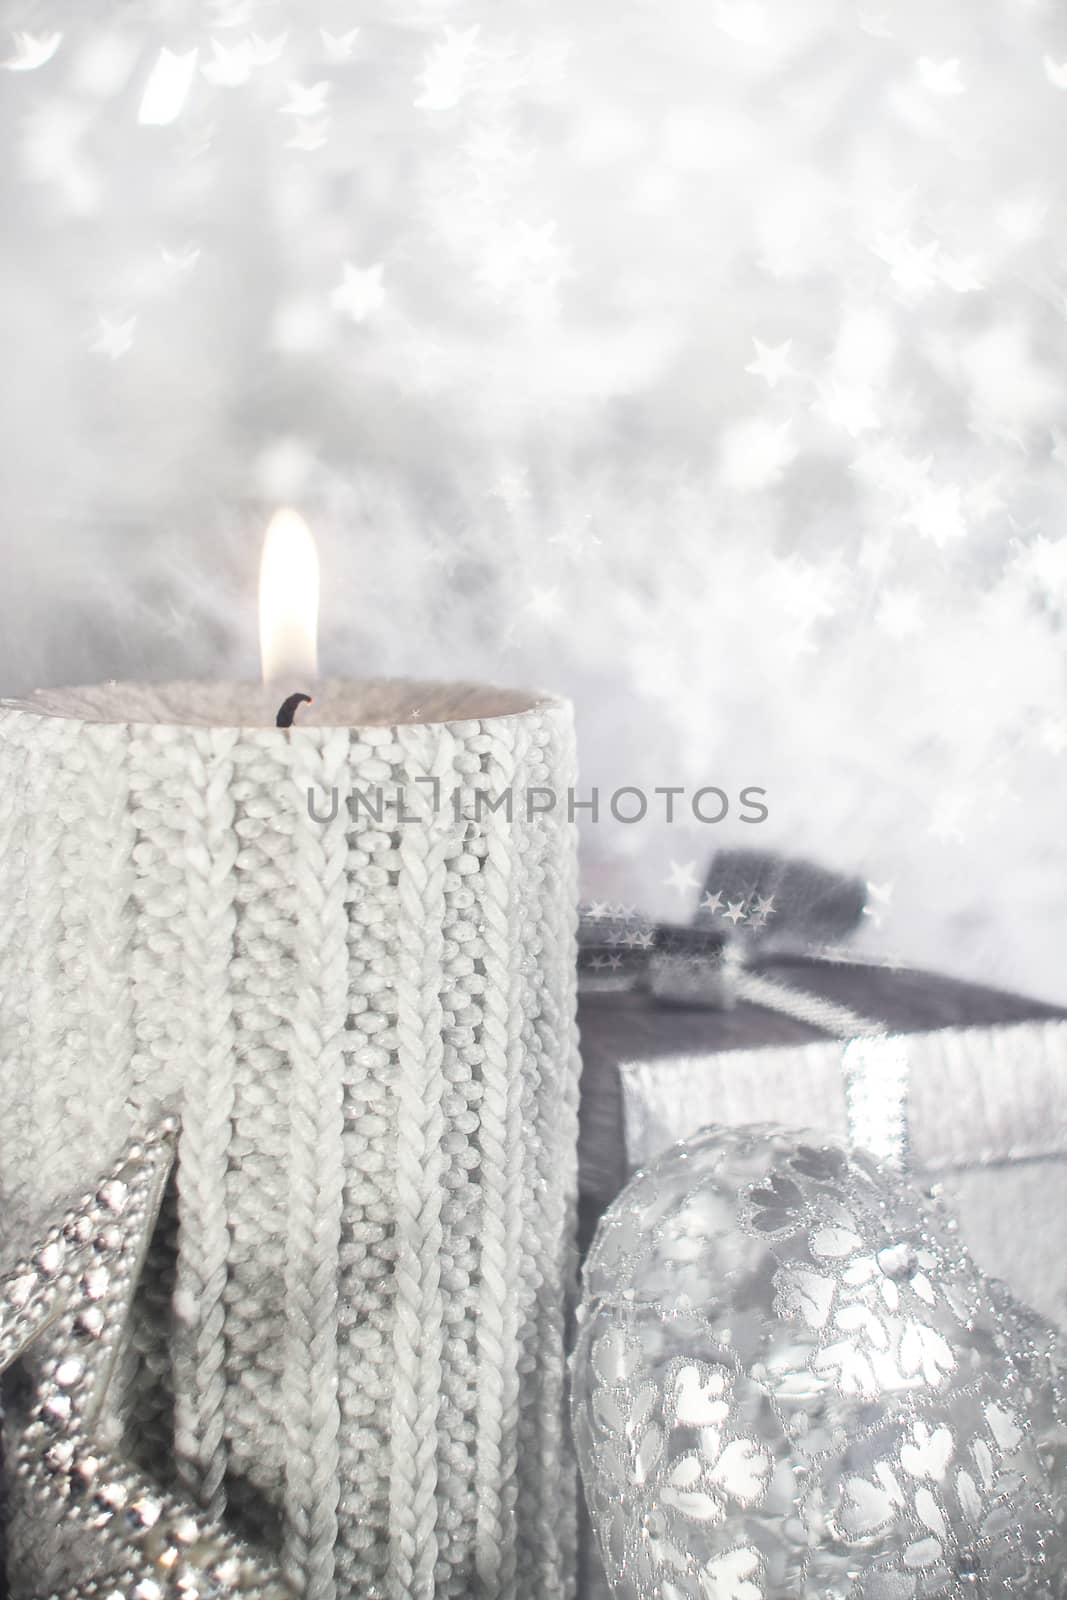 Beautiful shiny silver christmas decor and burning candle